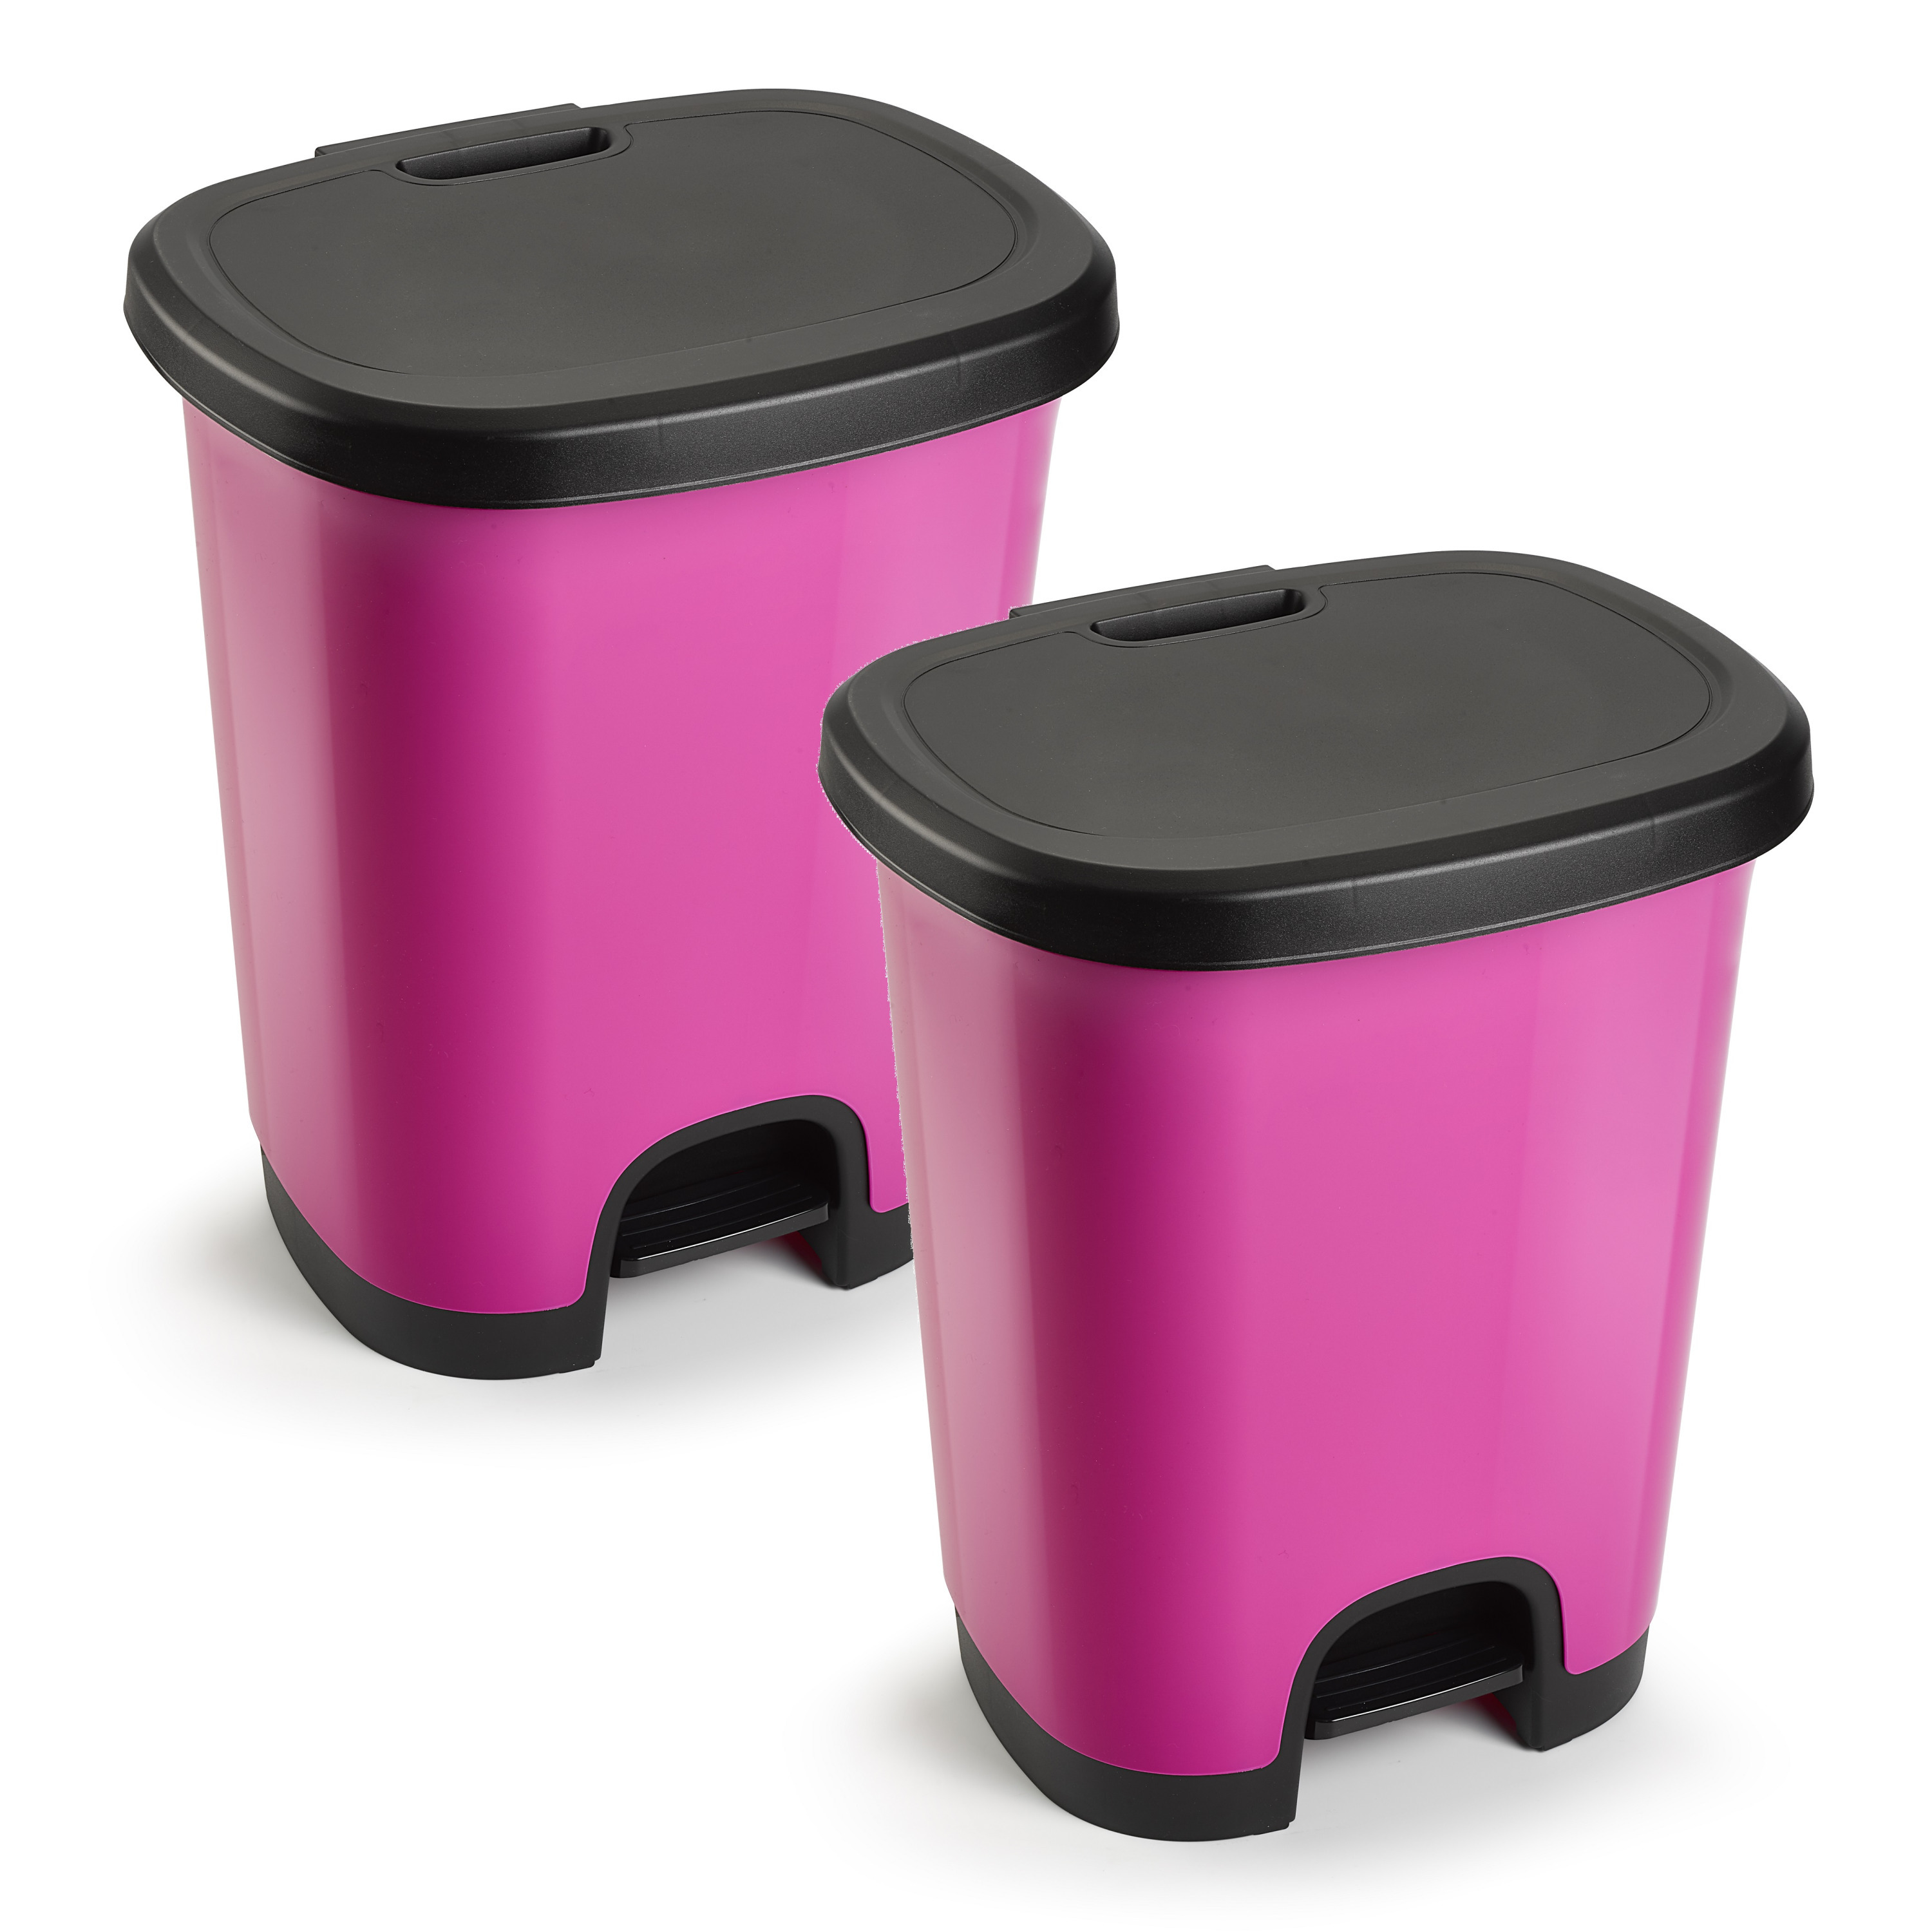 2x Stuks afvalemmer-vuilnisemmer-pedaalemmer 18 liter in het roze-zwart met deksel en pedaal